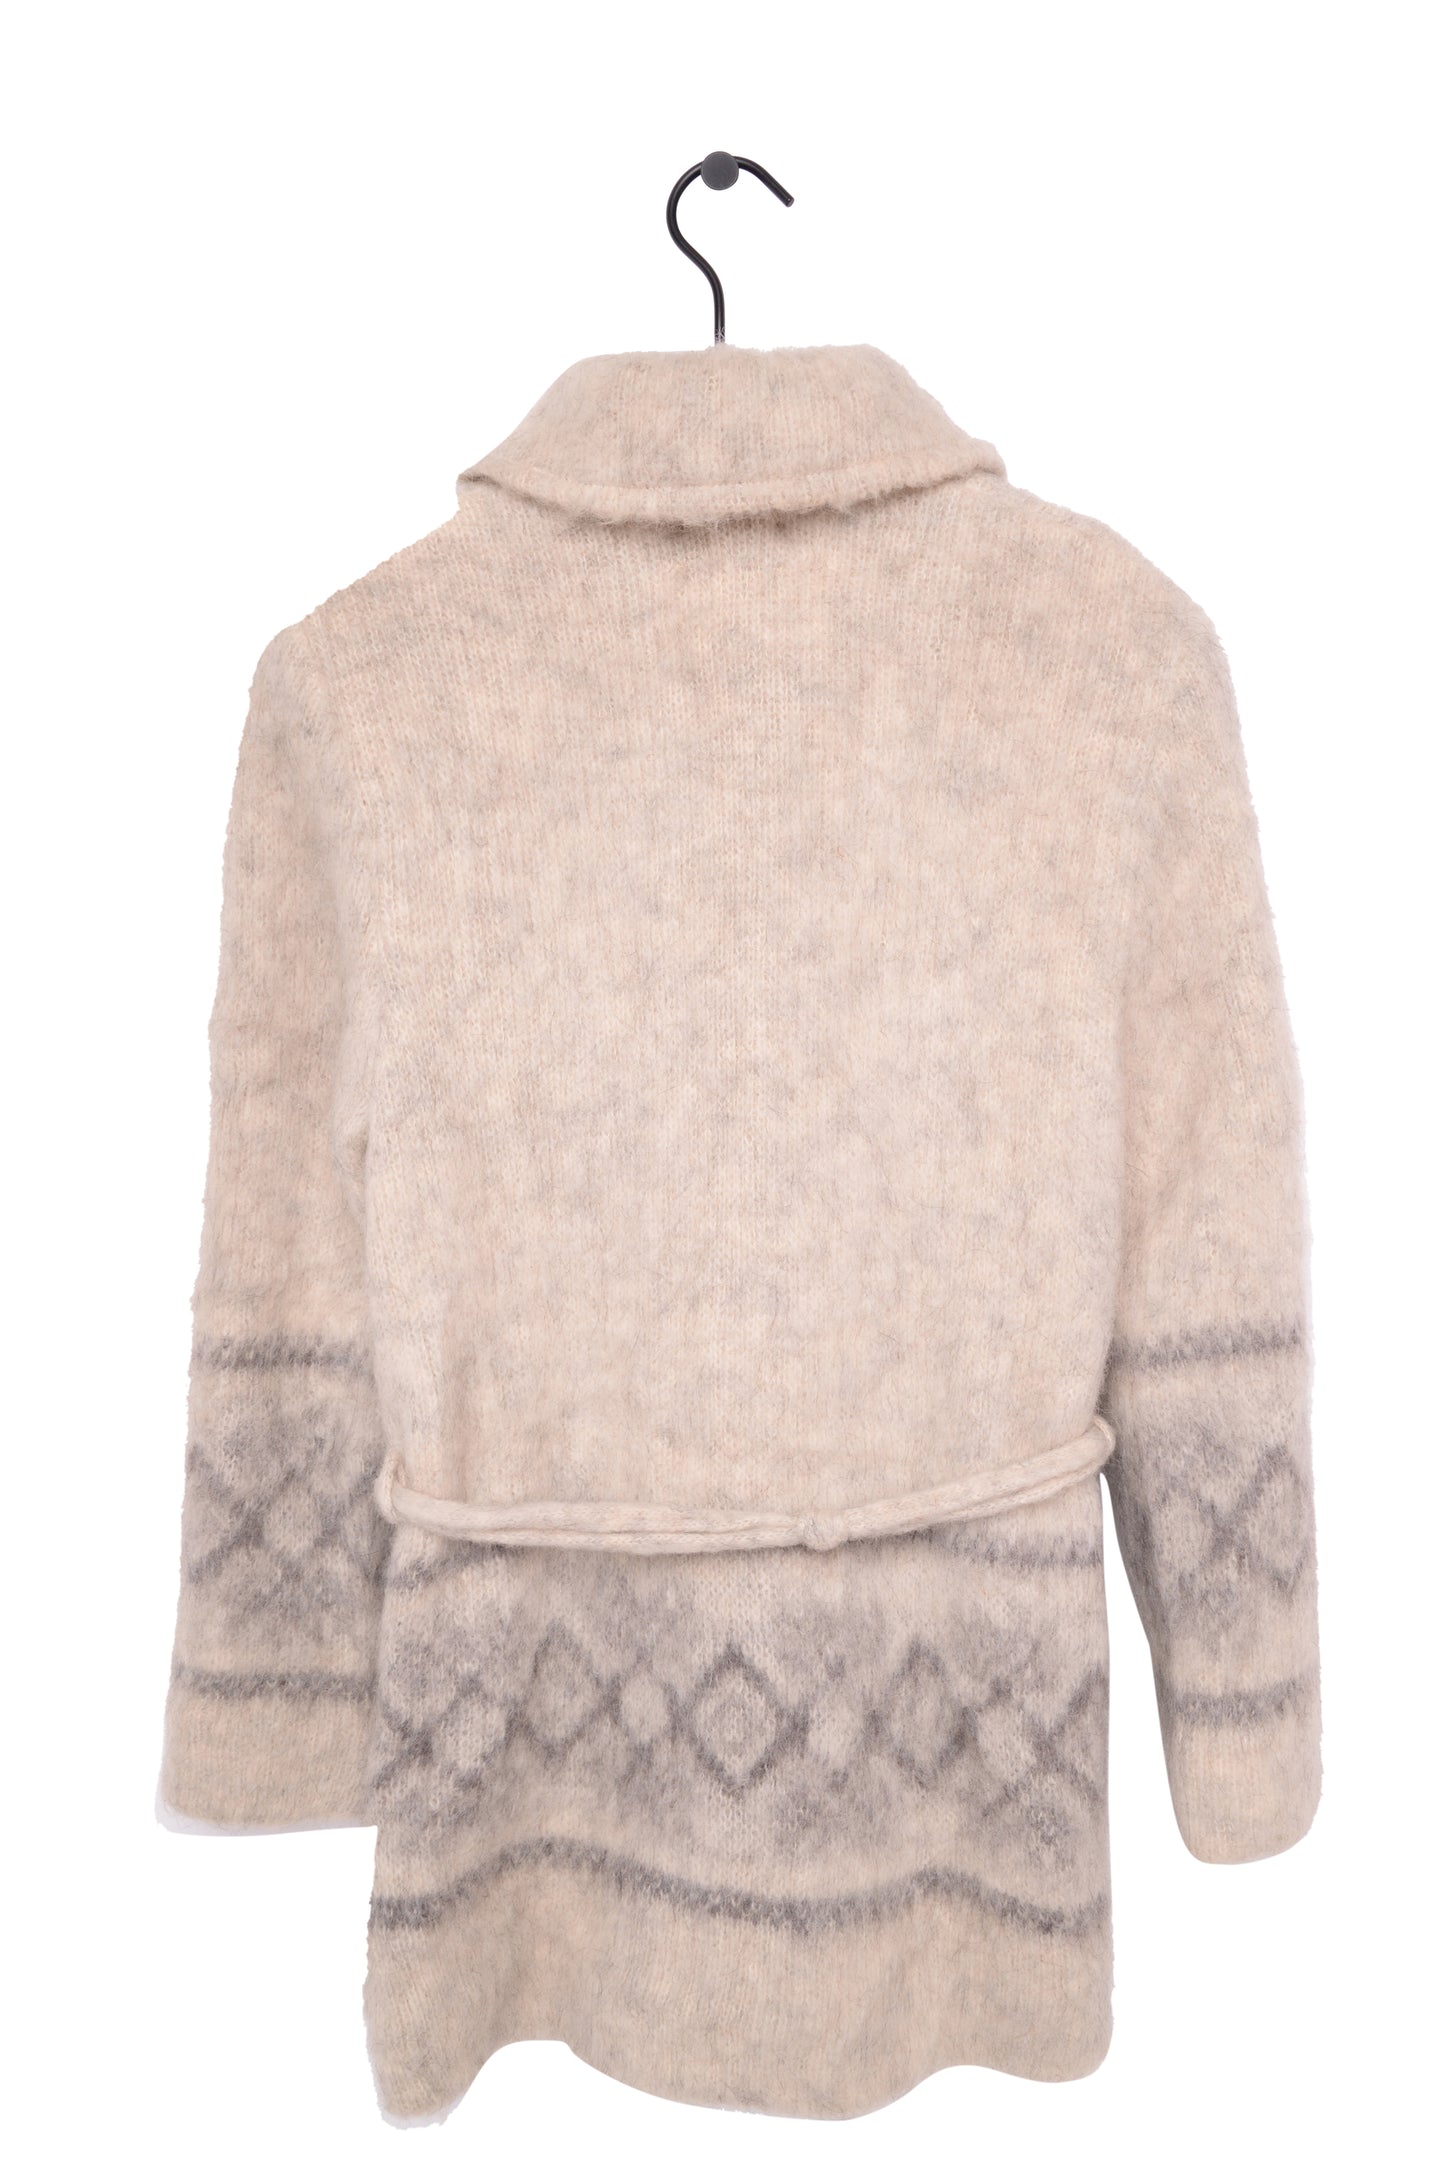 Wool Zip-Up Sweater Jacket